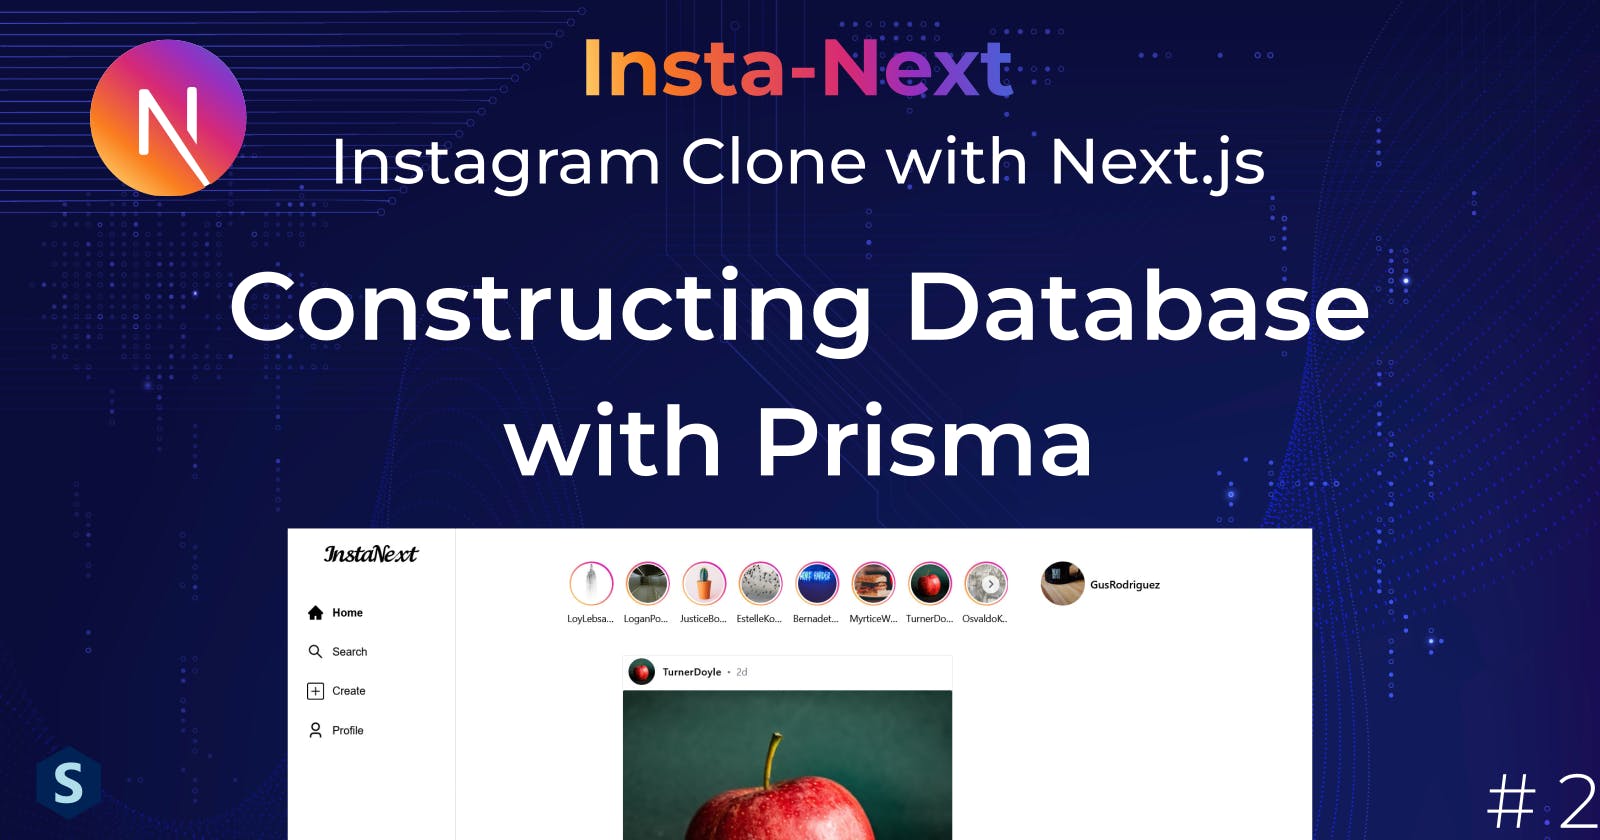 Insta-Next: Constructing Database with Prisma